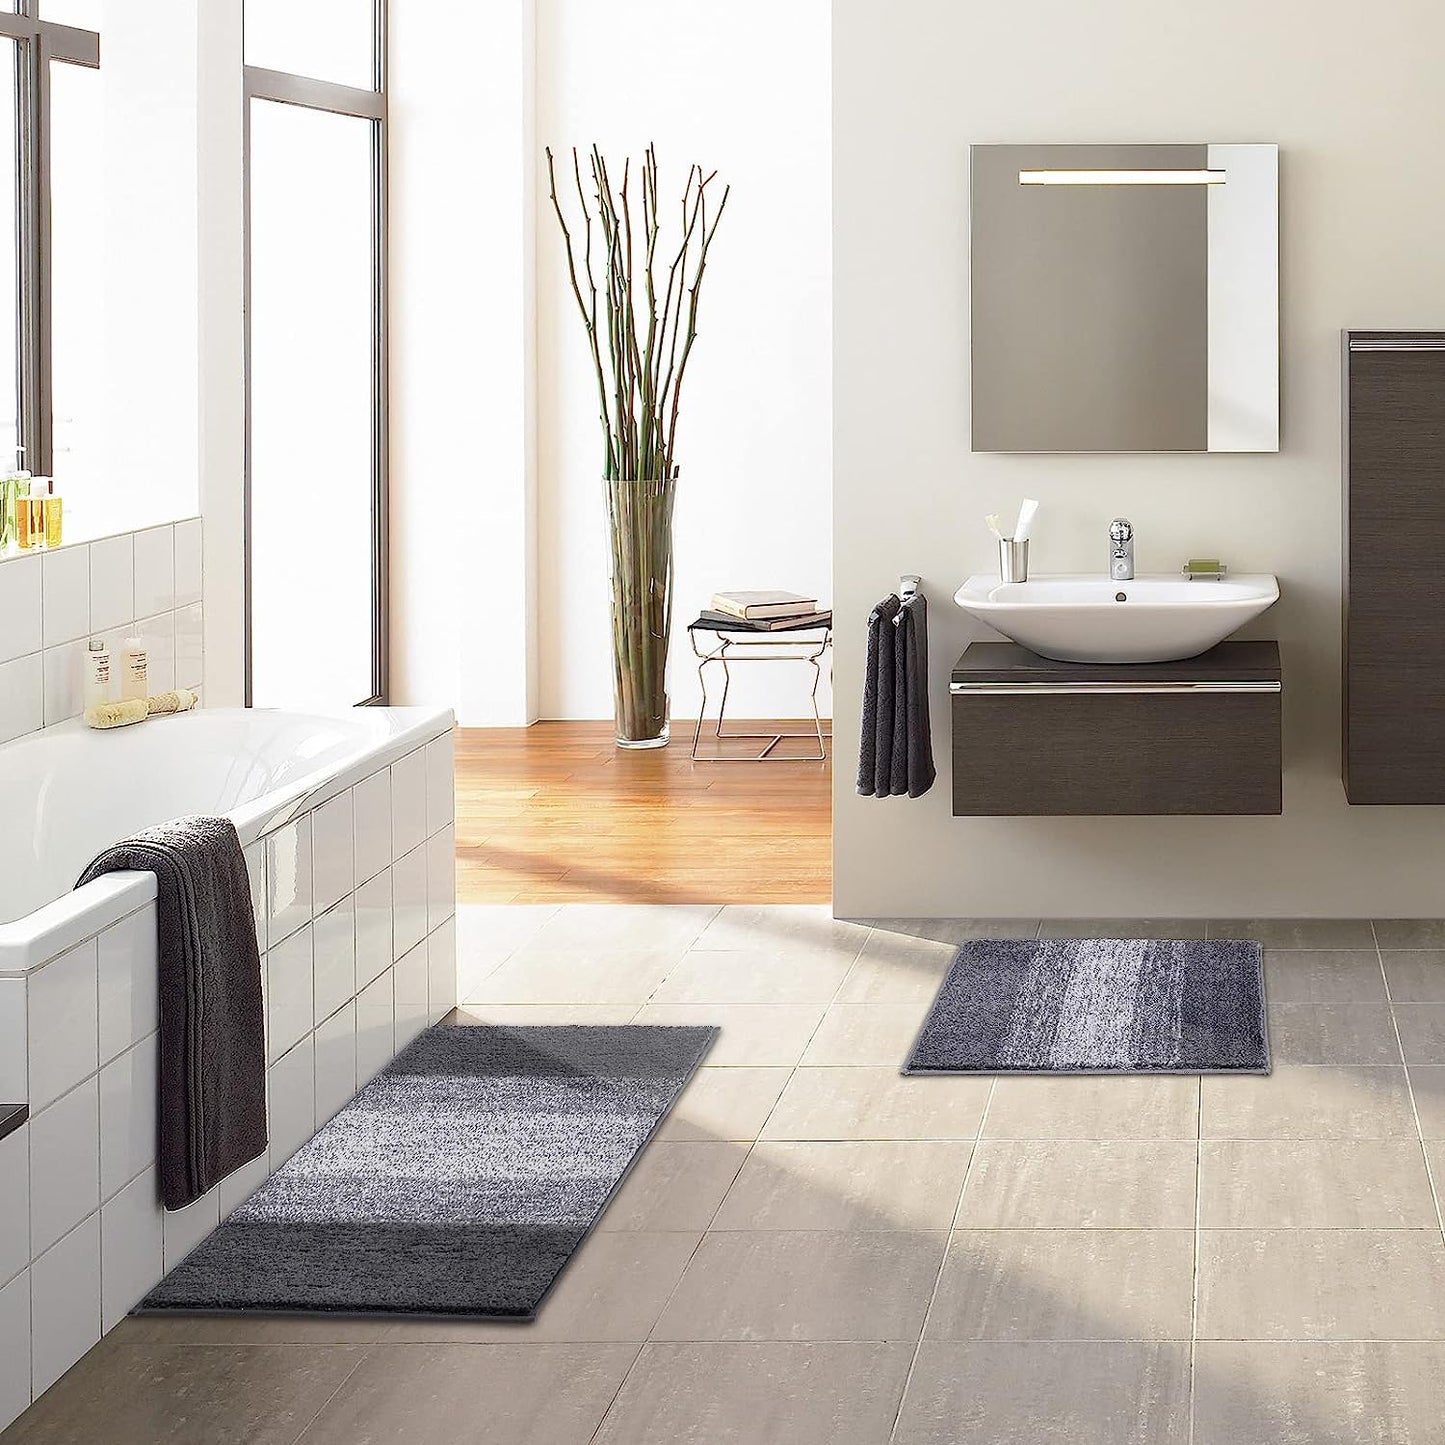 Soft Bathroom Rugs, Non-Slip Water Absorbent Bath Mat, Simple Style Bathroom Decor